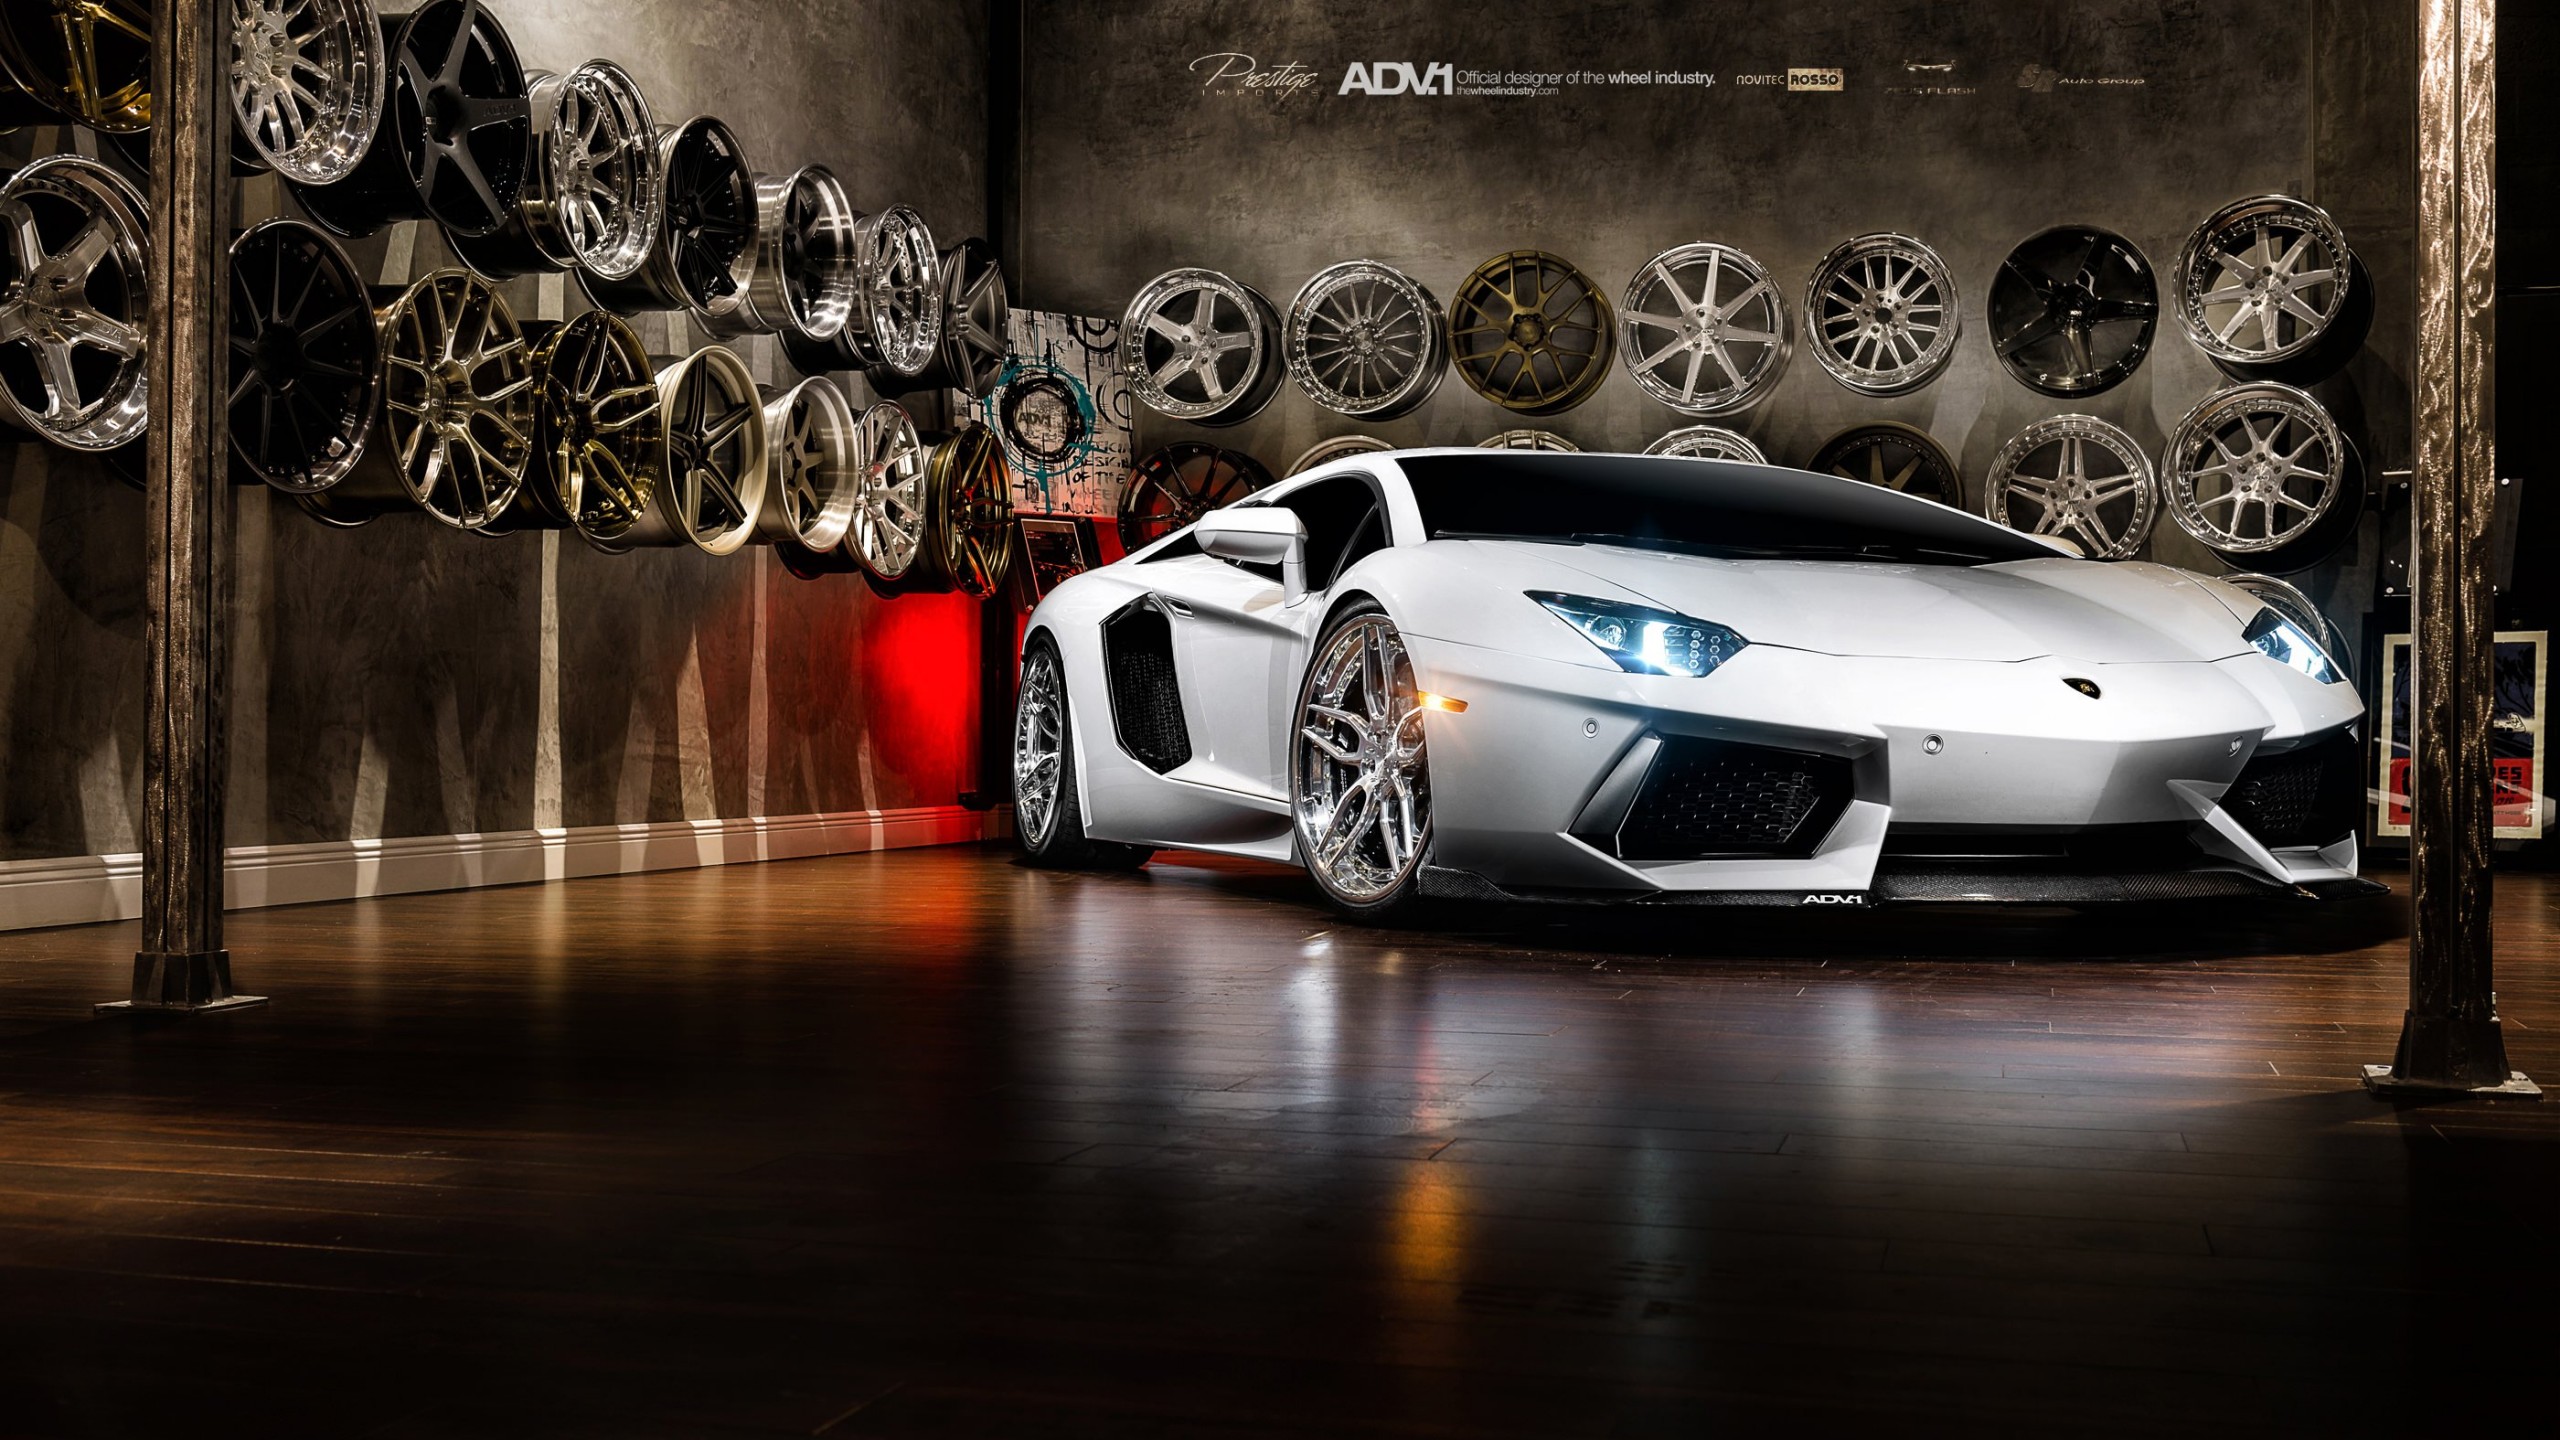 Lamborghini Aventador On ADV.1 Wheels Wallpaper for Desktop 2560x1440